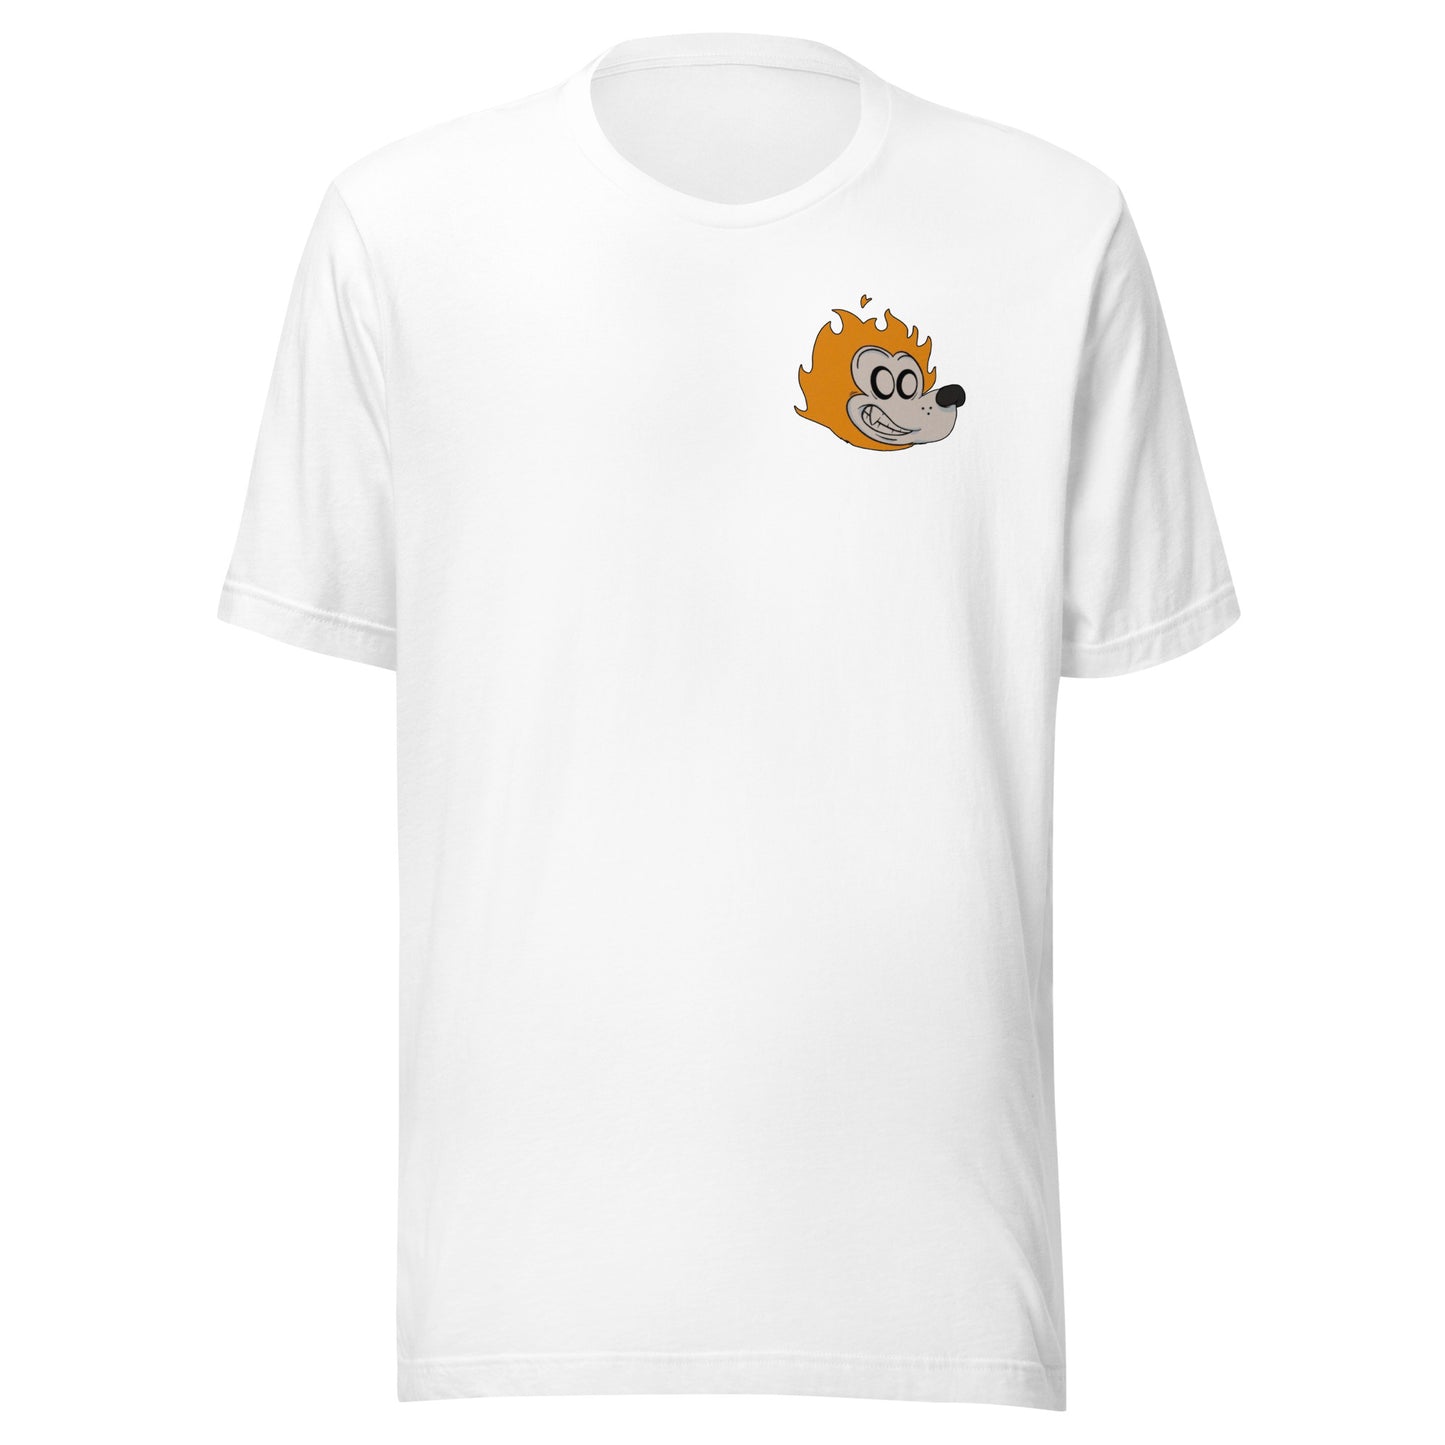 Toonies Customizable Unisex t-shirt